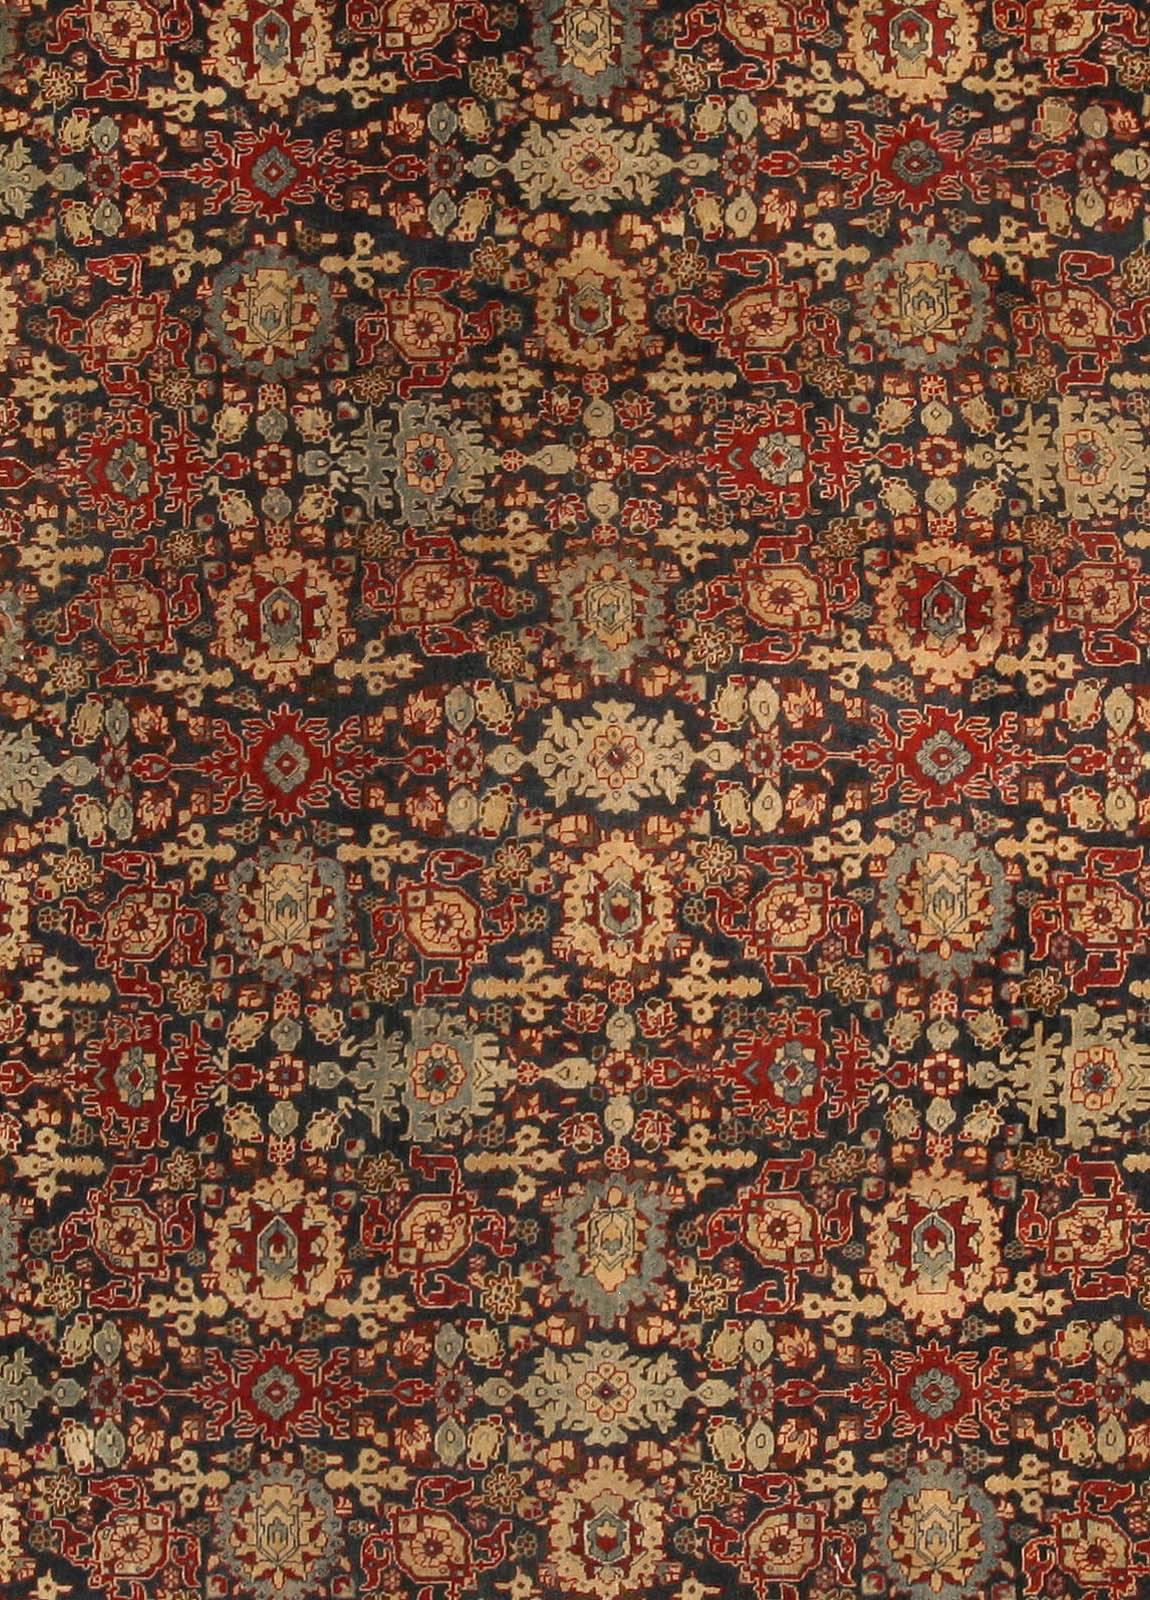 Antique Persian Tabriz Botanic Handmade Wool Rug
Size: 12'0